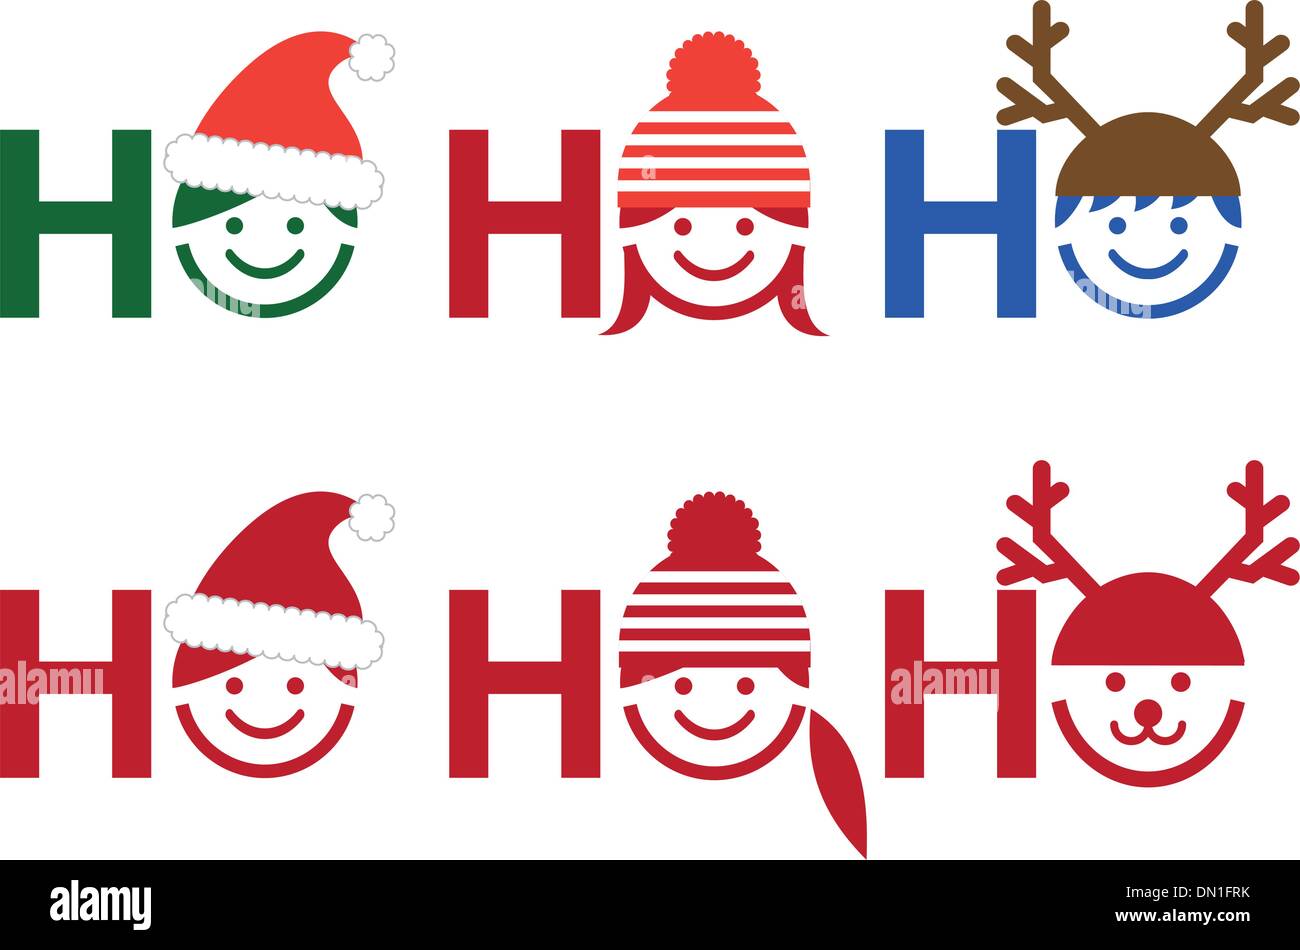 Christmas Ho Ho Ho Vector Art, Icons, and Graphics for Free Download